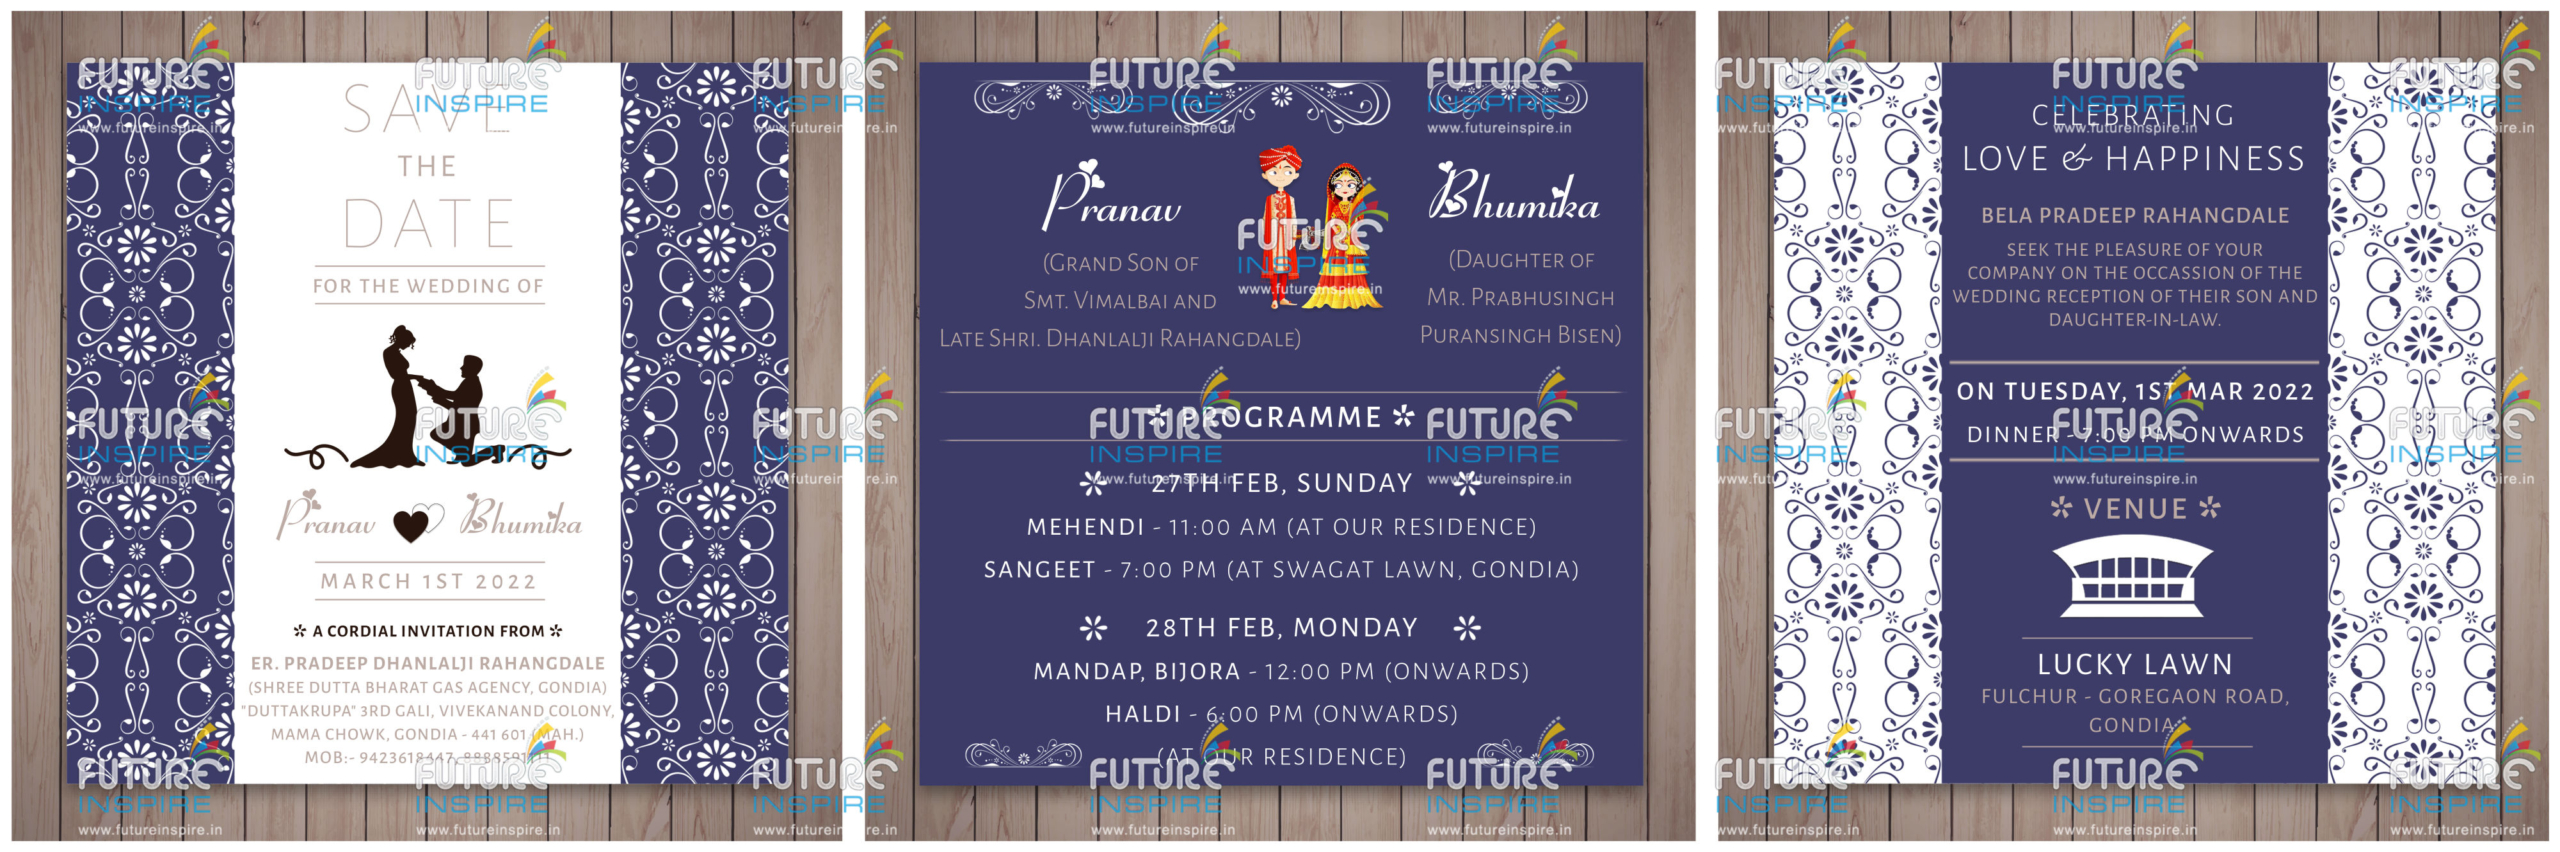 Pranav weds Bhumika Premium Wedding Invitation E Card scaled